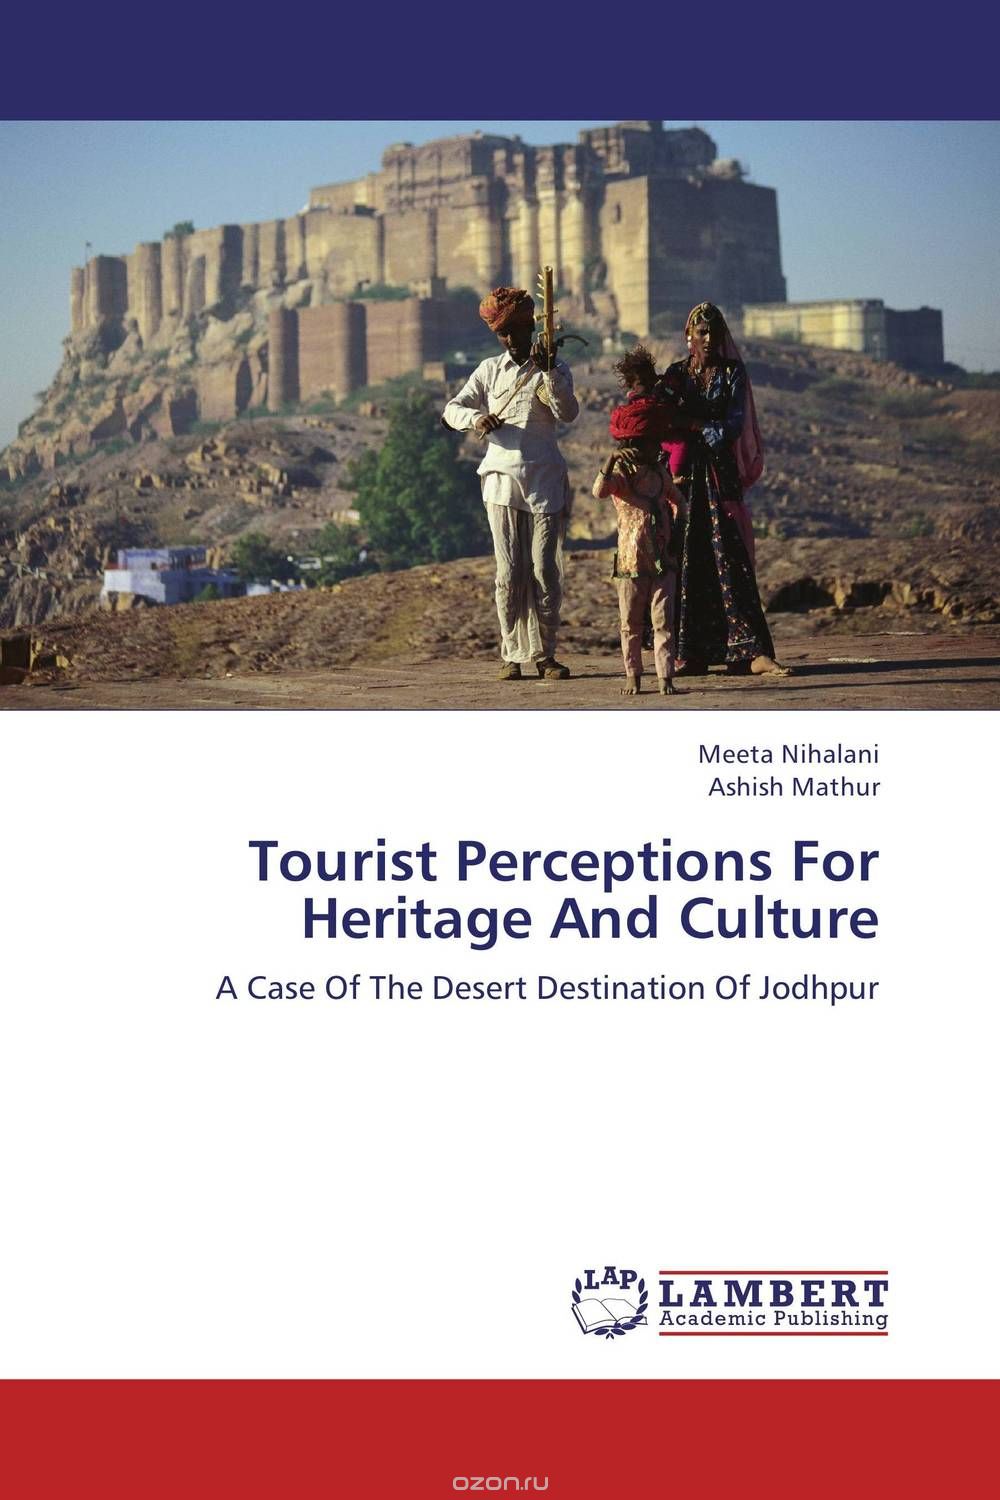 Скачать книгу "Tourist Perceptions For Heritage And Culture"